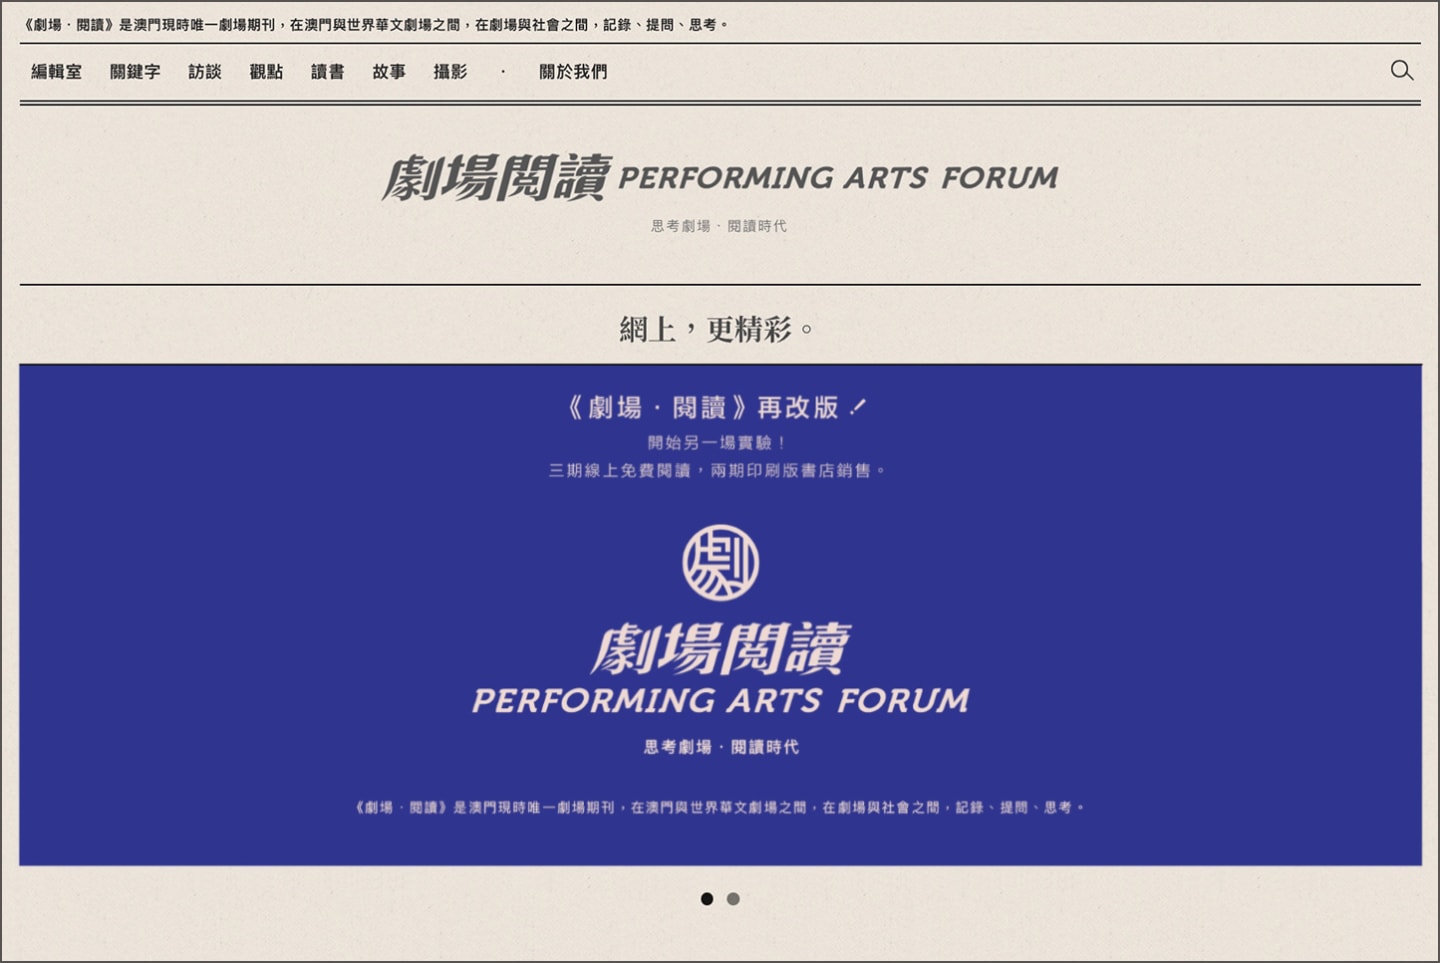 **Performing Arts Forum - Website**   
**劇場閱讀網上版**   
Mar, 2021  
Macao Theatre Culture Institute

[http://paf.macautheatre.org.mo](http://paf.macautheatre.org.mo)